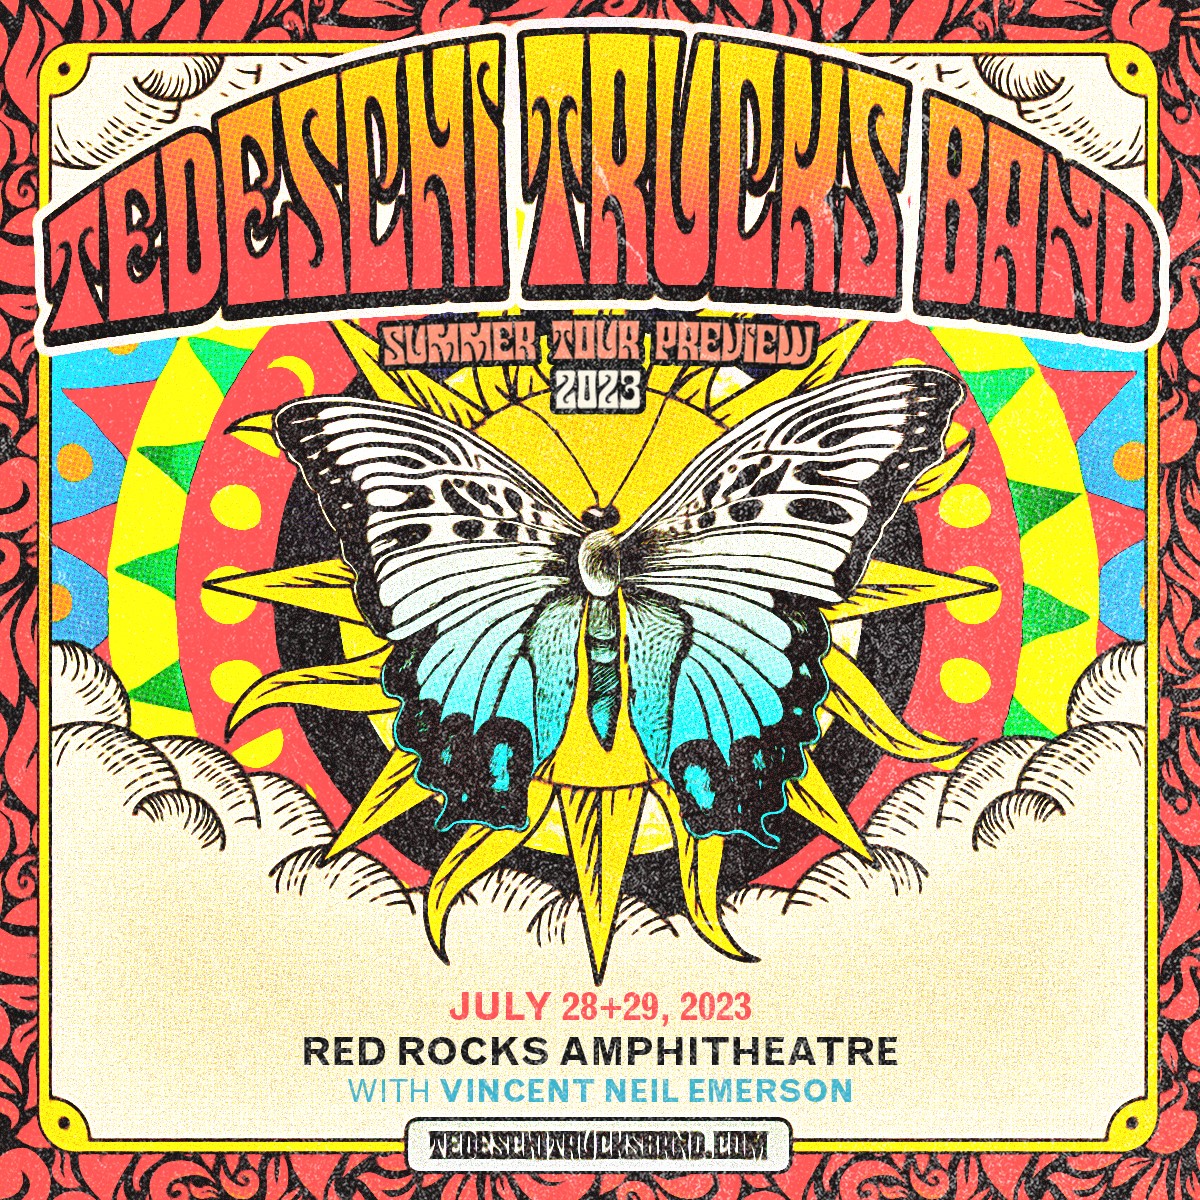 Tedeschi Trucks Band Shuttle To Red Rocks July 29, 2023 CID Colorado